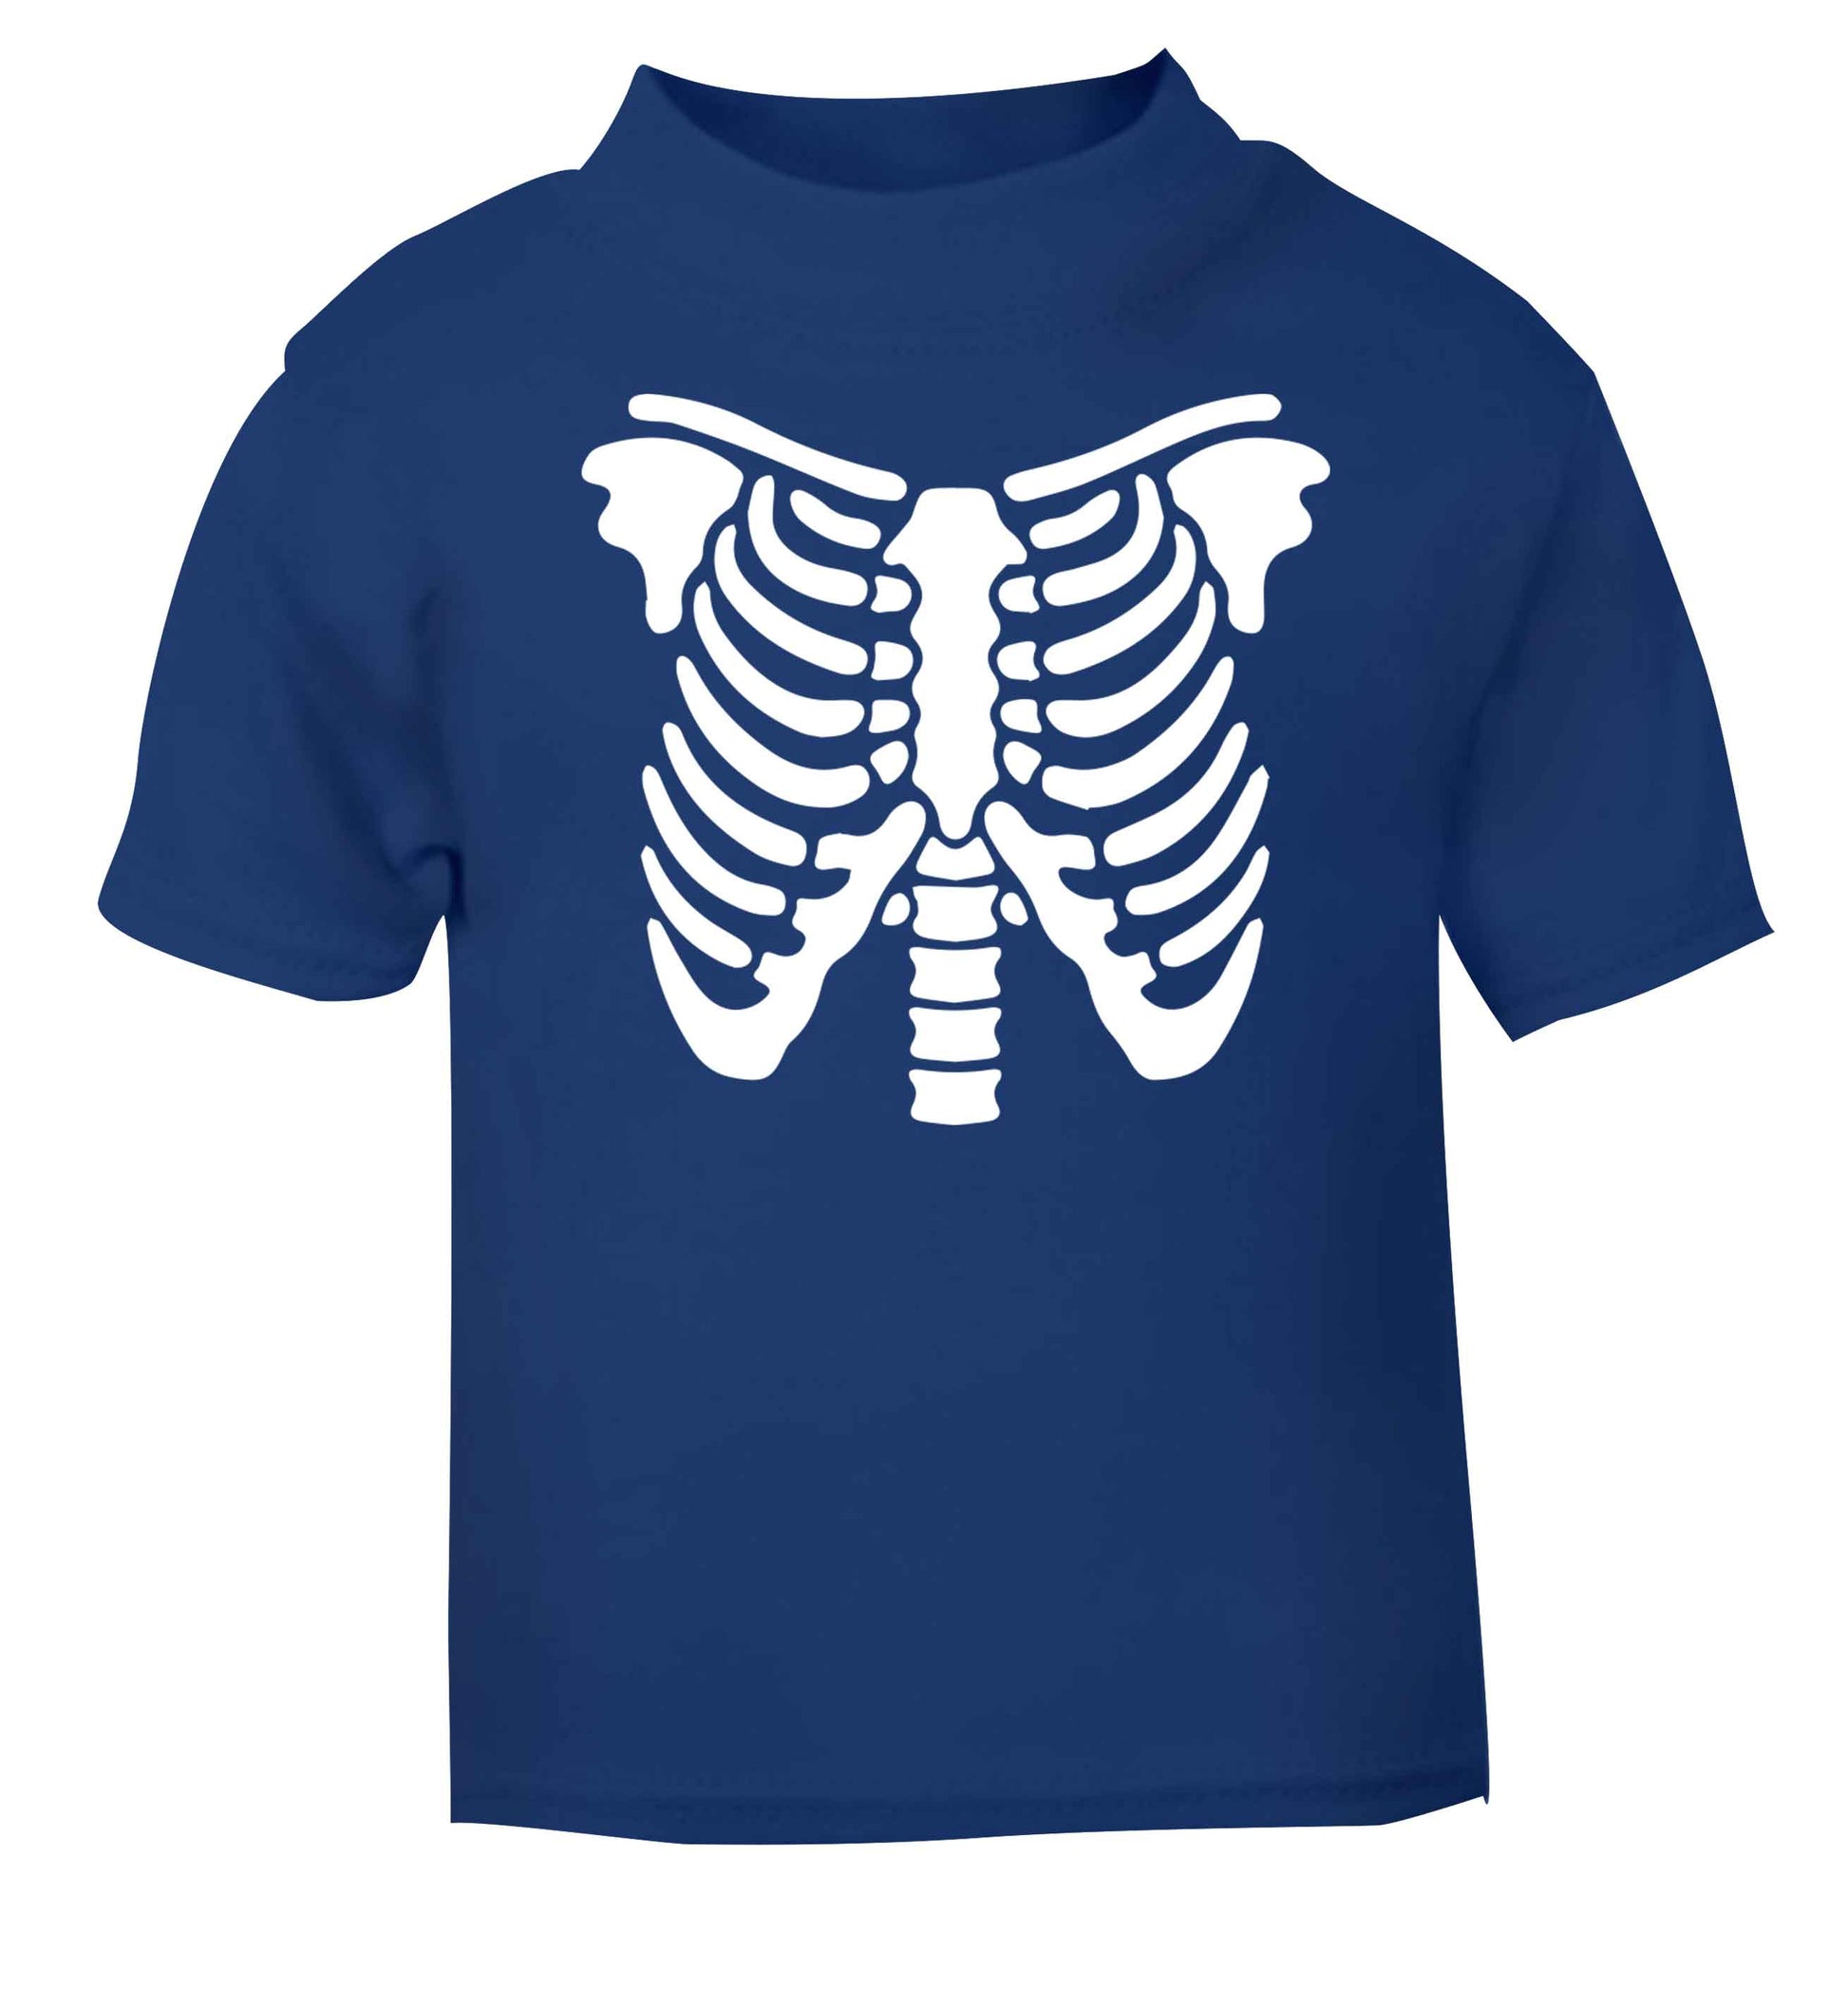 Skeleton ribcage blue baby toddler Tshirt 2 Years